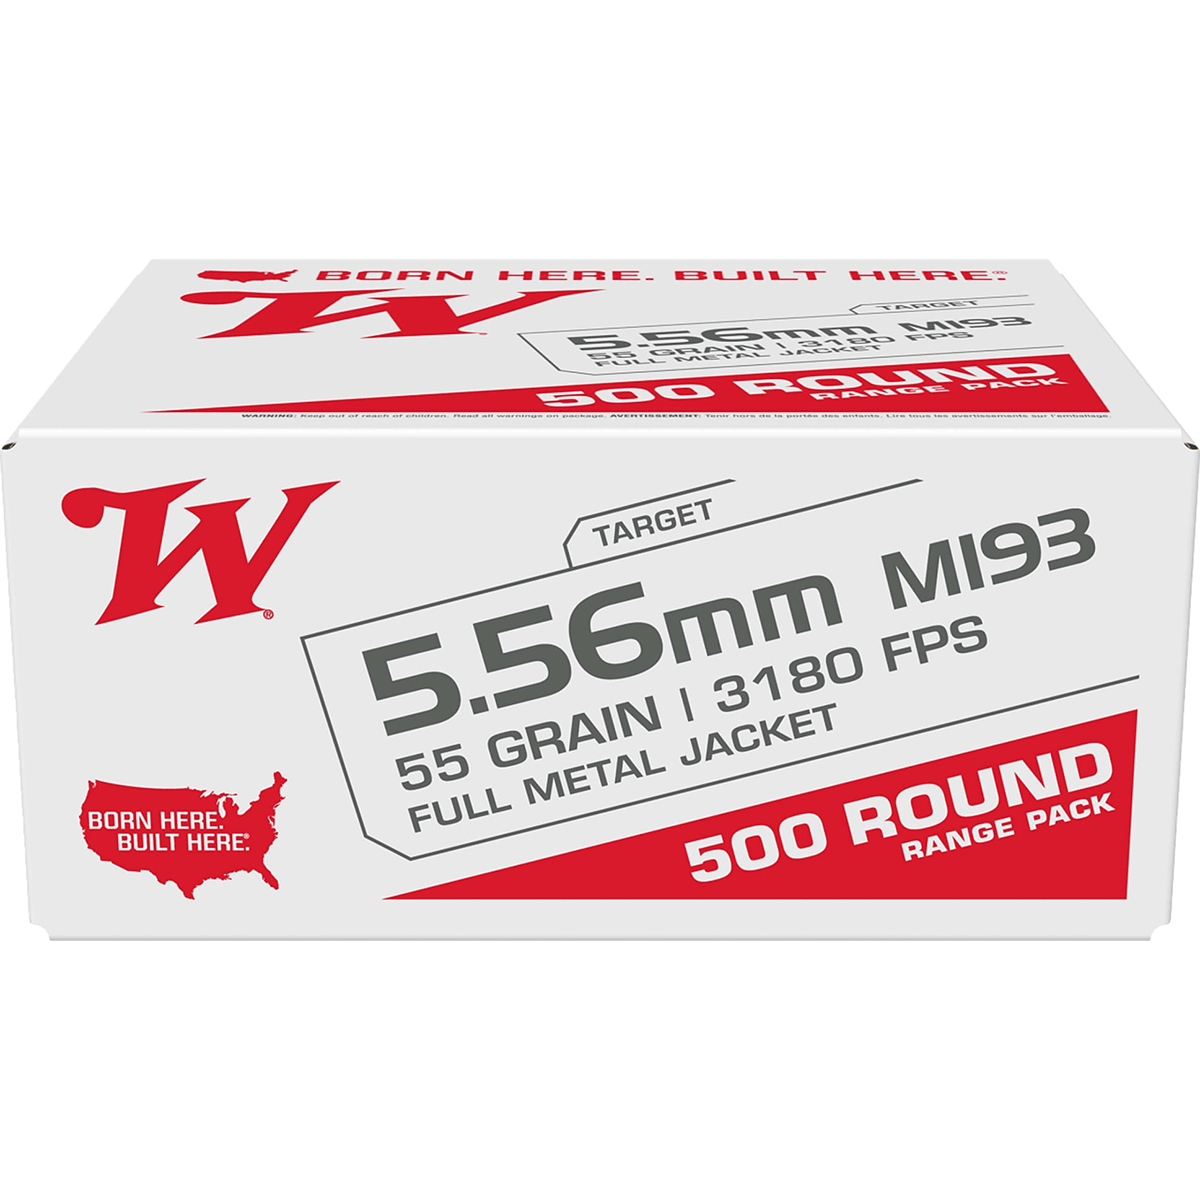 Winchester Ammo 5.56x45mm NATO M193 Ammo 55 Grain FMJ 500 Rounds Value Pack